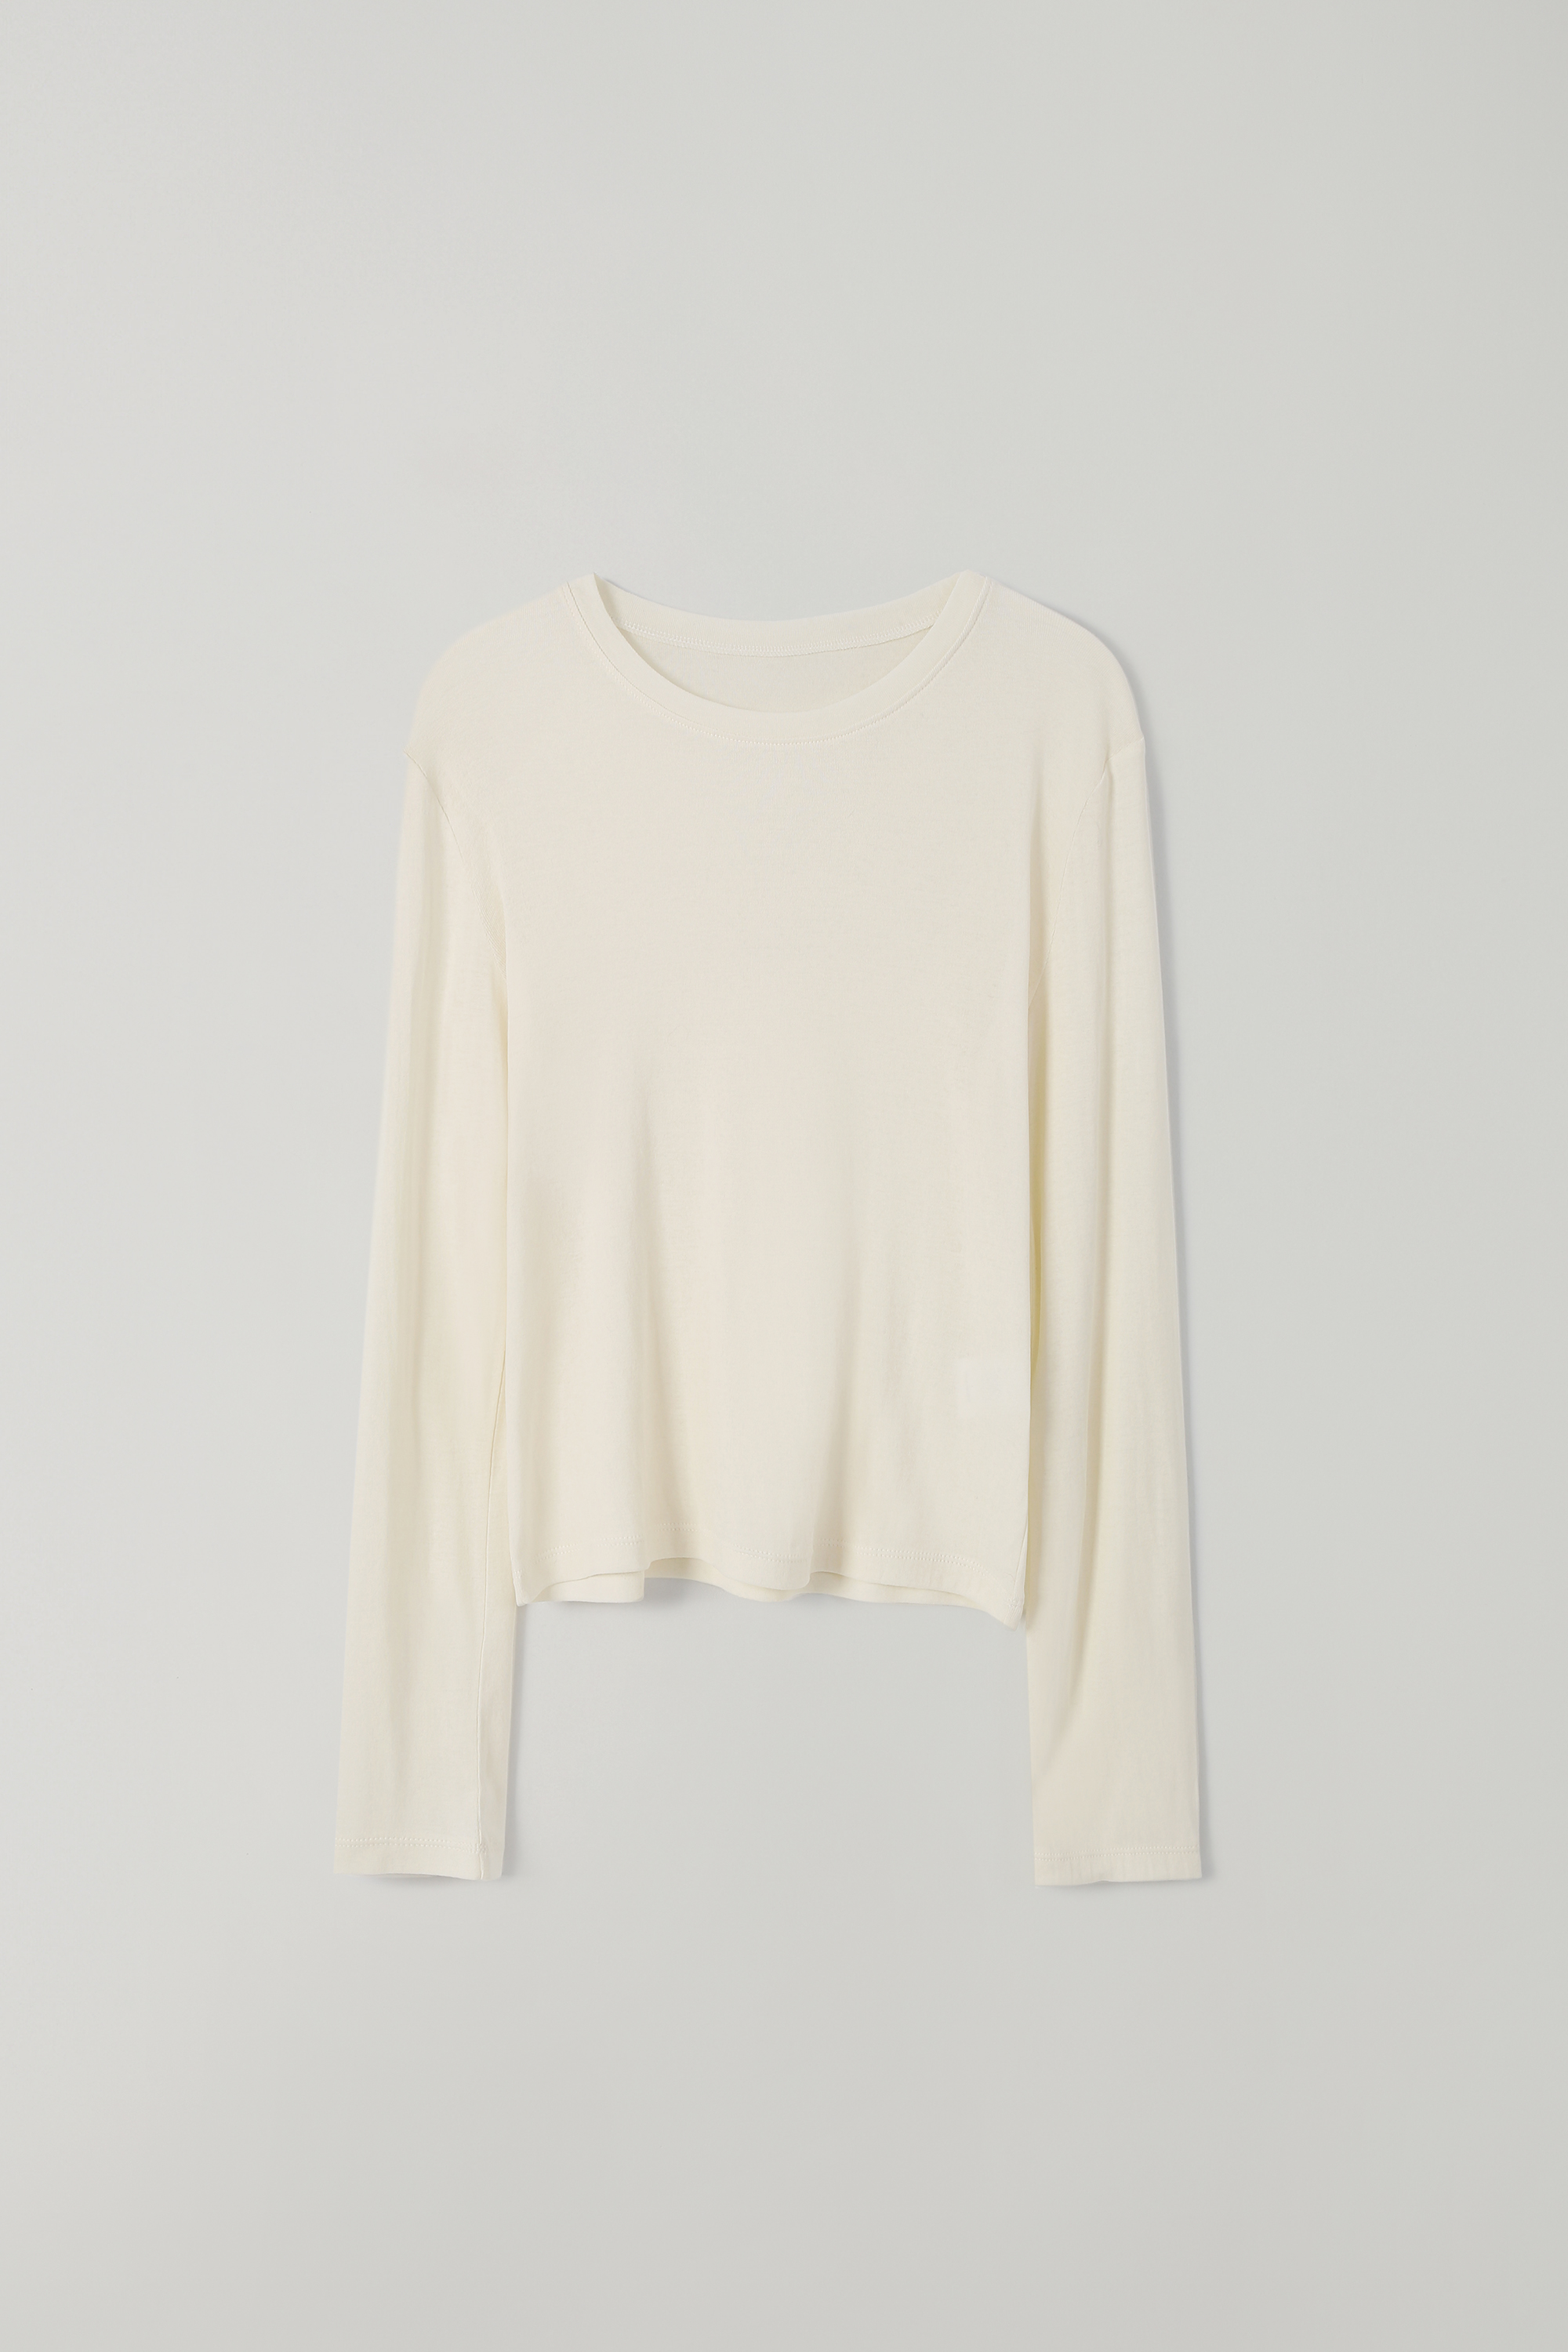 (1st re-stock)T/T Pastel soft t-shirt (cream)